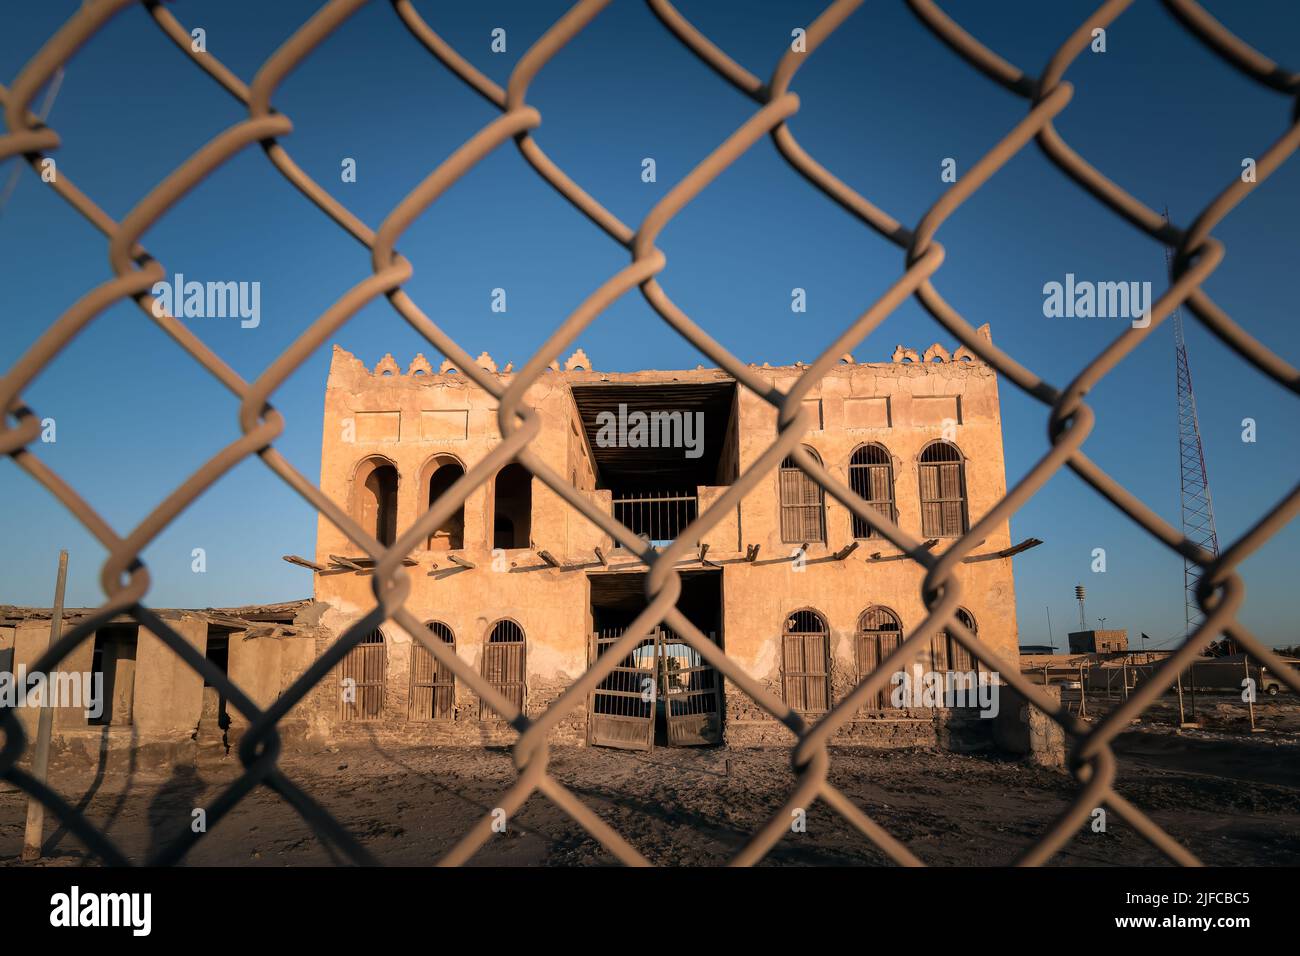 An entrance of Historical Old Al-Uqair port in Saudi Arabia. Selective focused click. Stock Photo